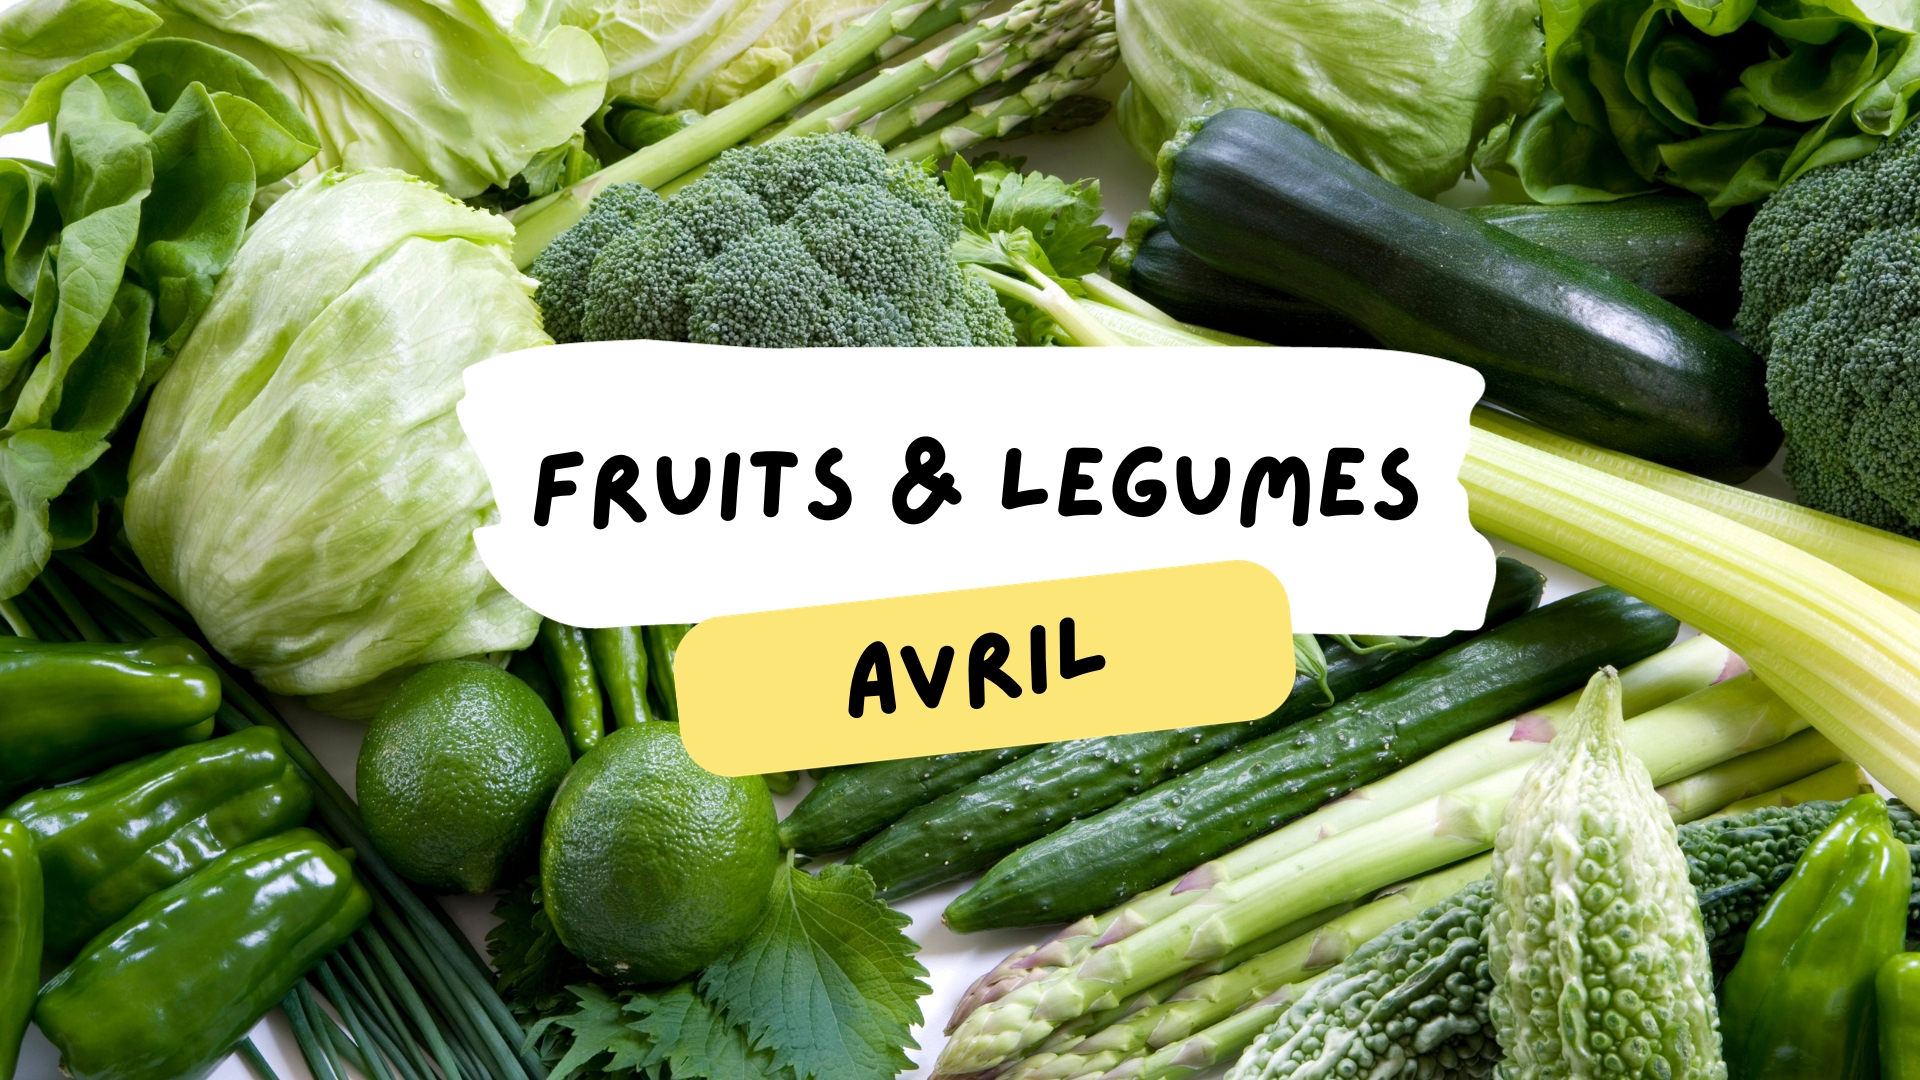 fruits legumes avril